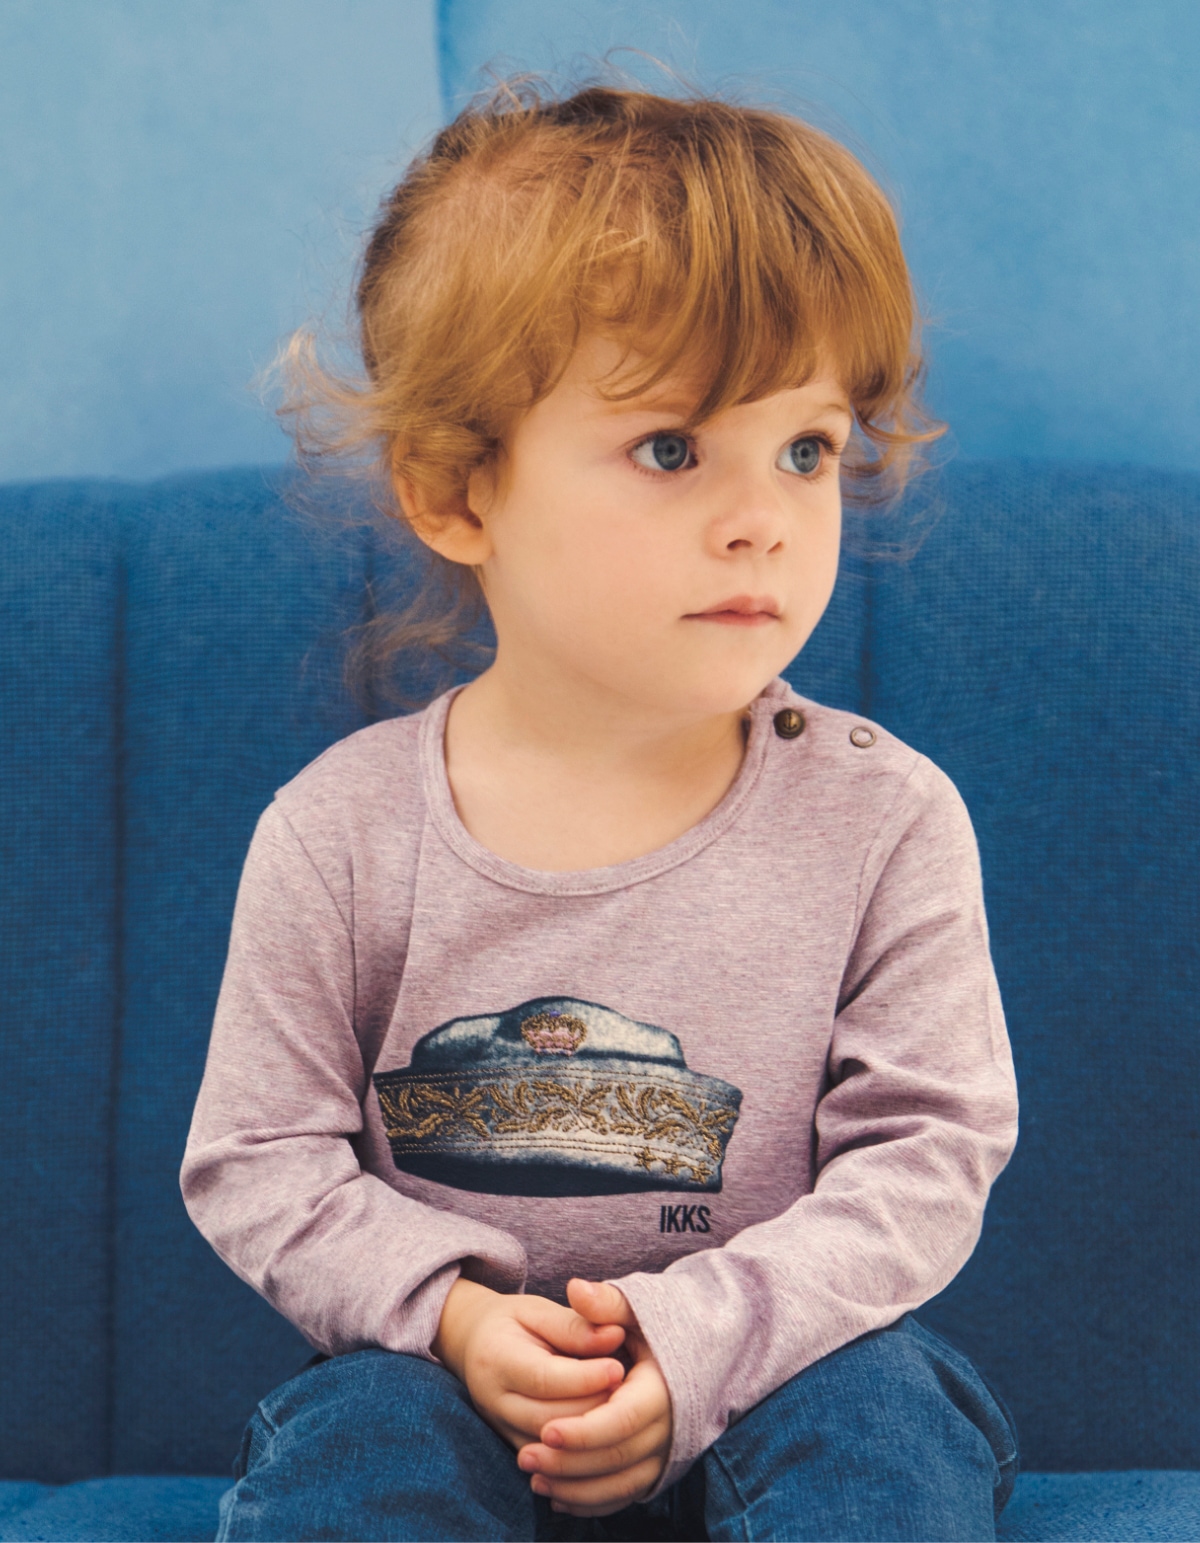 Camiseta lila jaspeado boina marinera bordado bebé niña